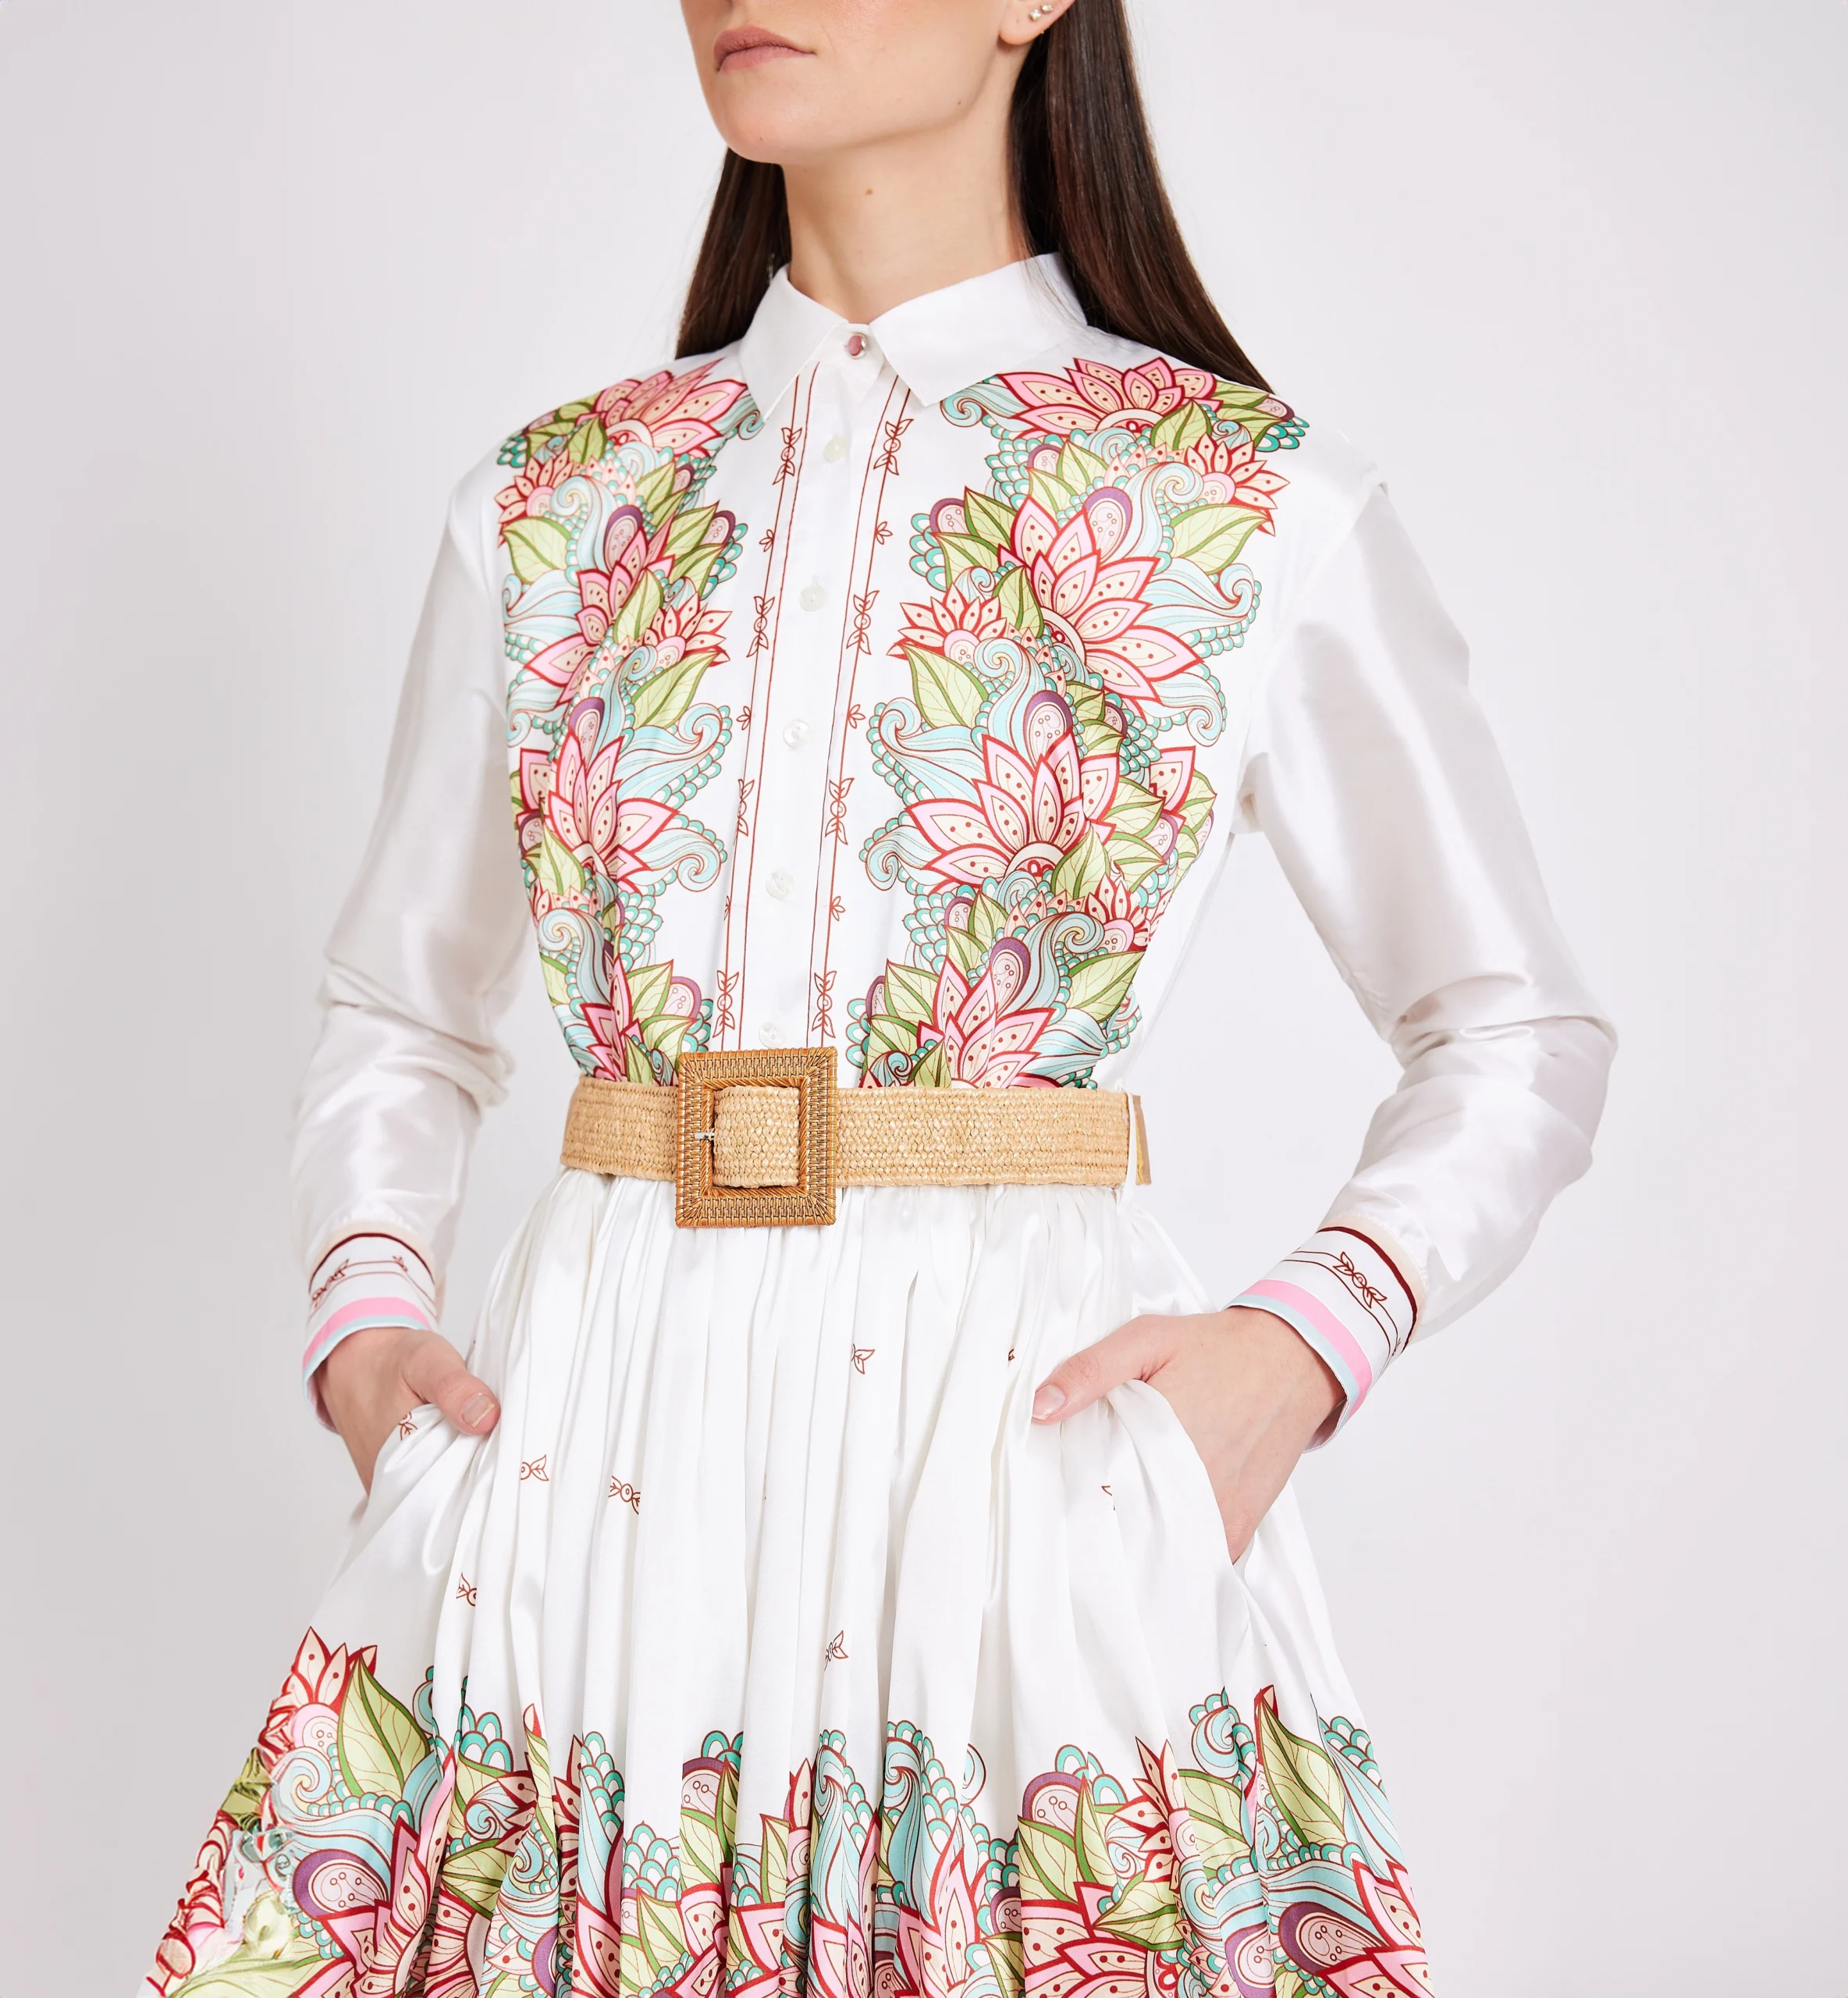 Colourful printed taffeta dress, white